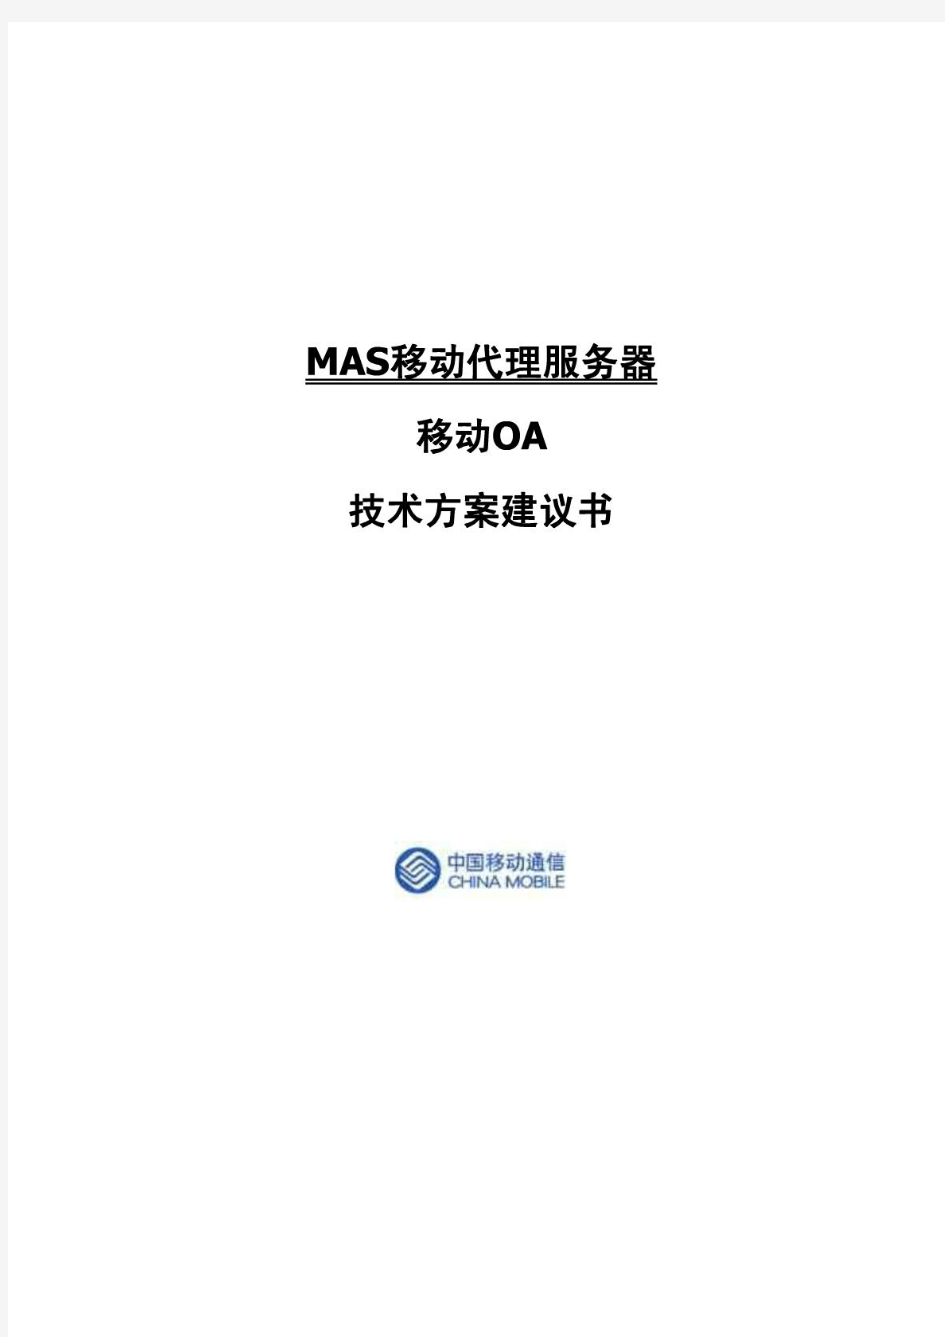 MAS信息机应用 移动OA技术方案建议书(中石油交流 应用案例 苏宁电器 广东建行 邮政等)